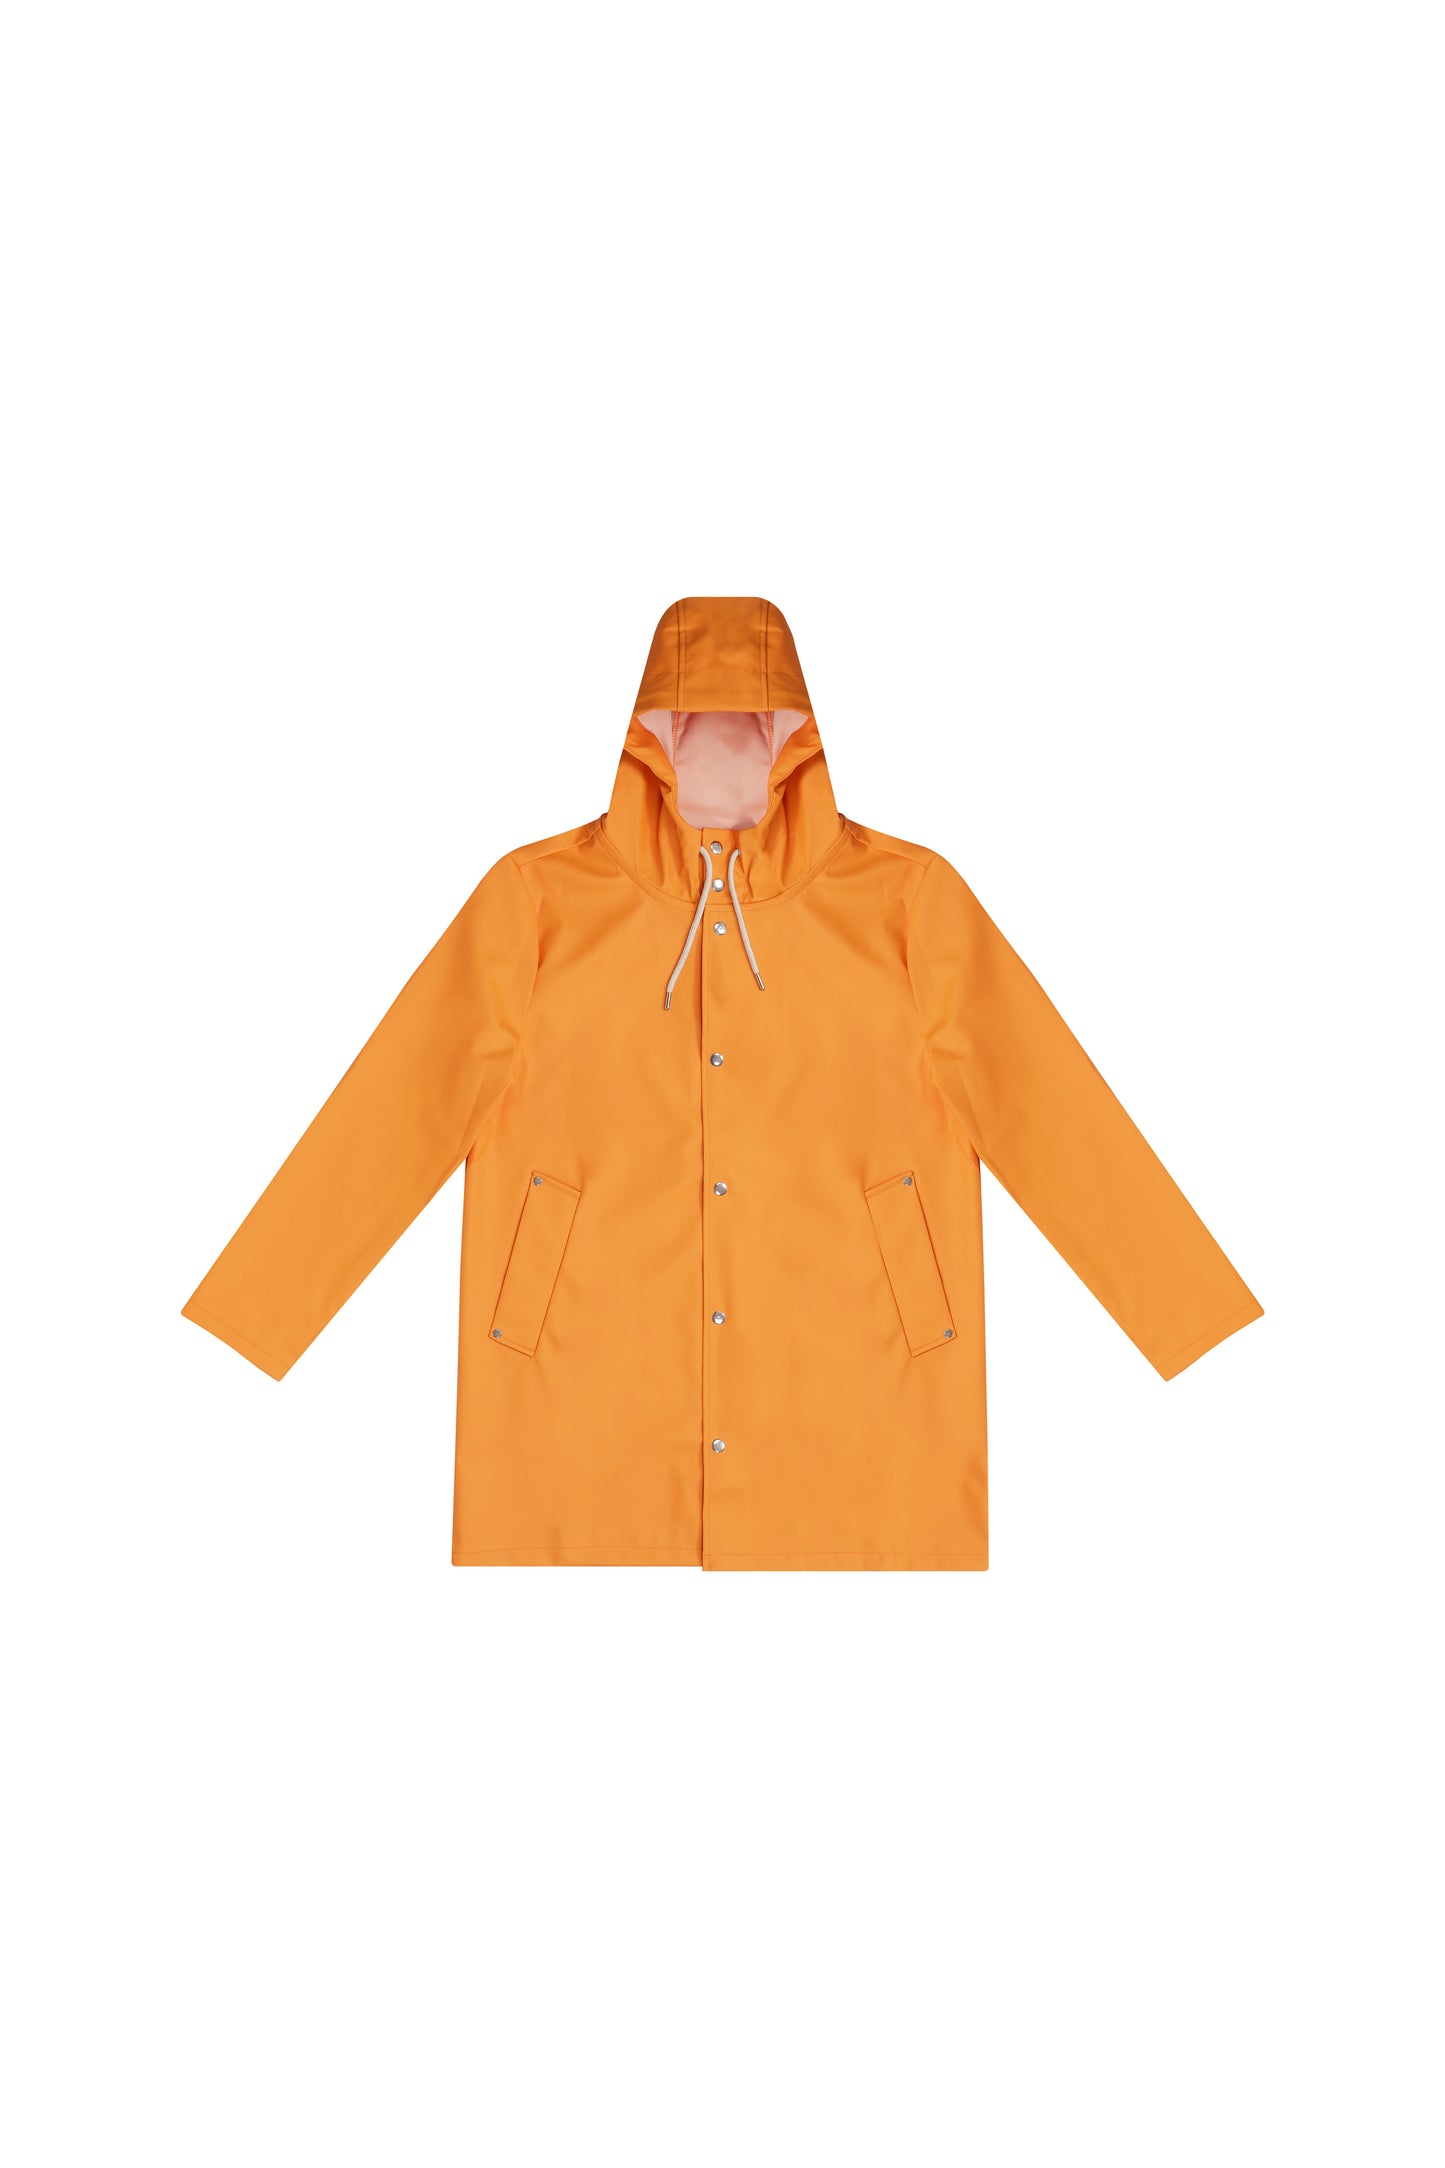 Unisex Raincoat - Orange